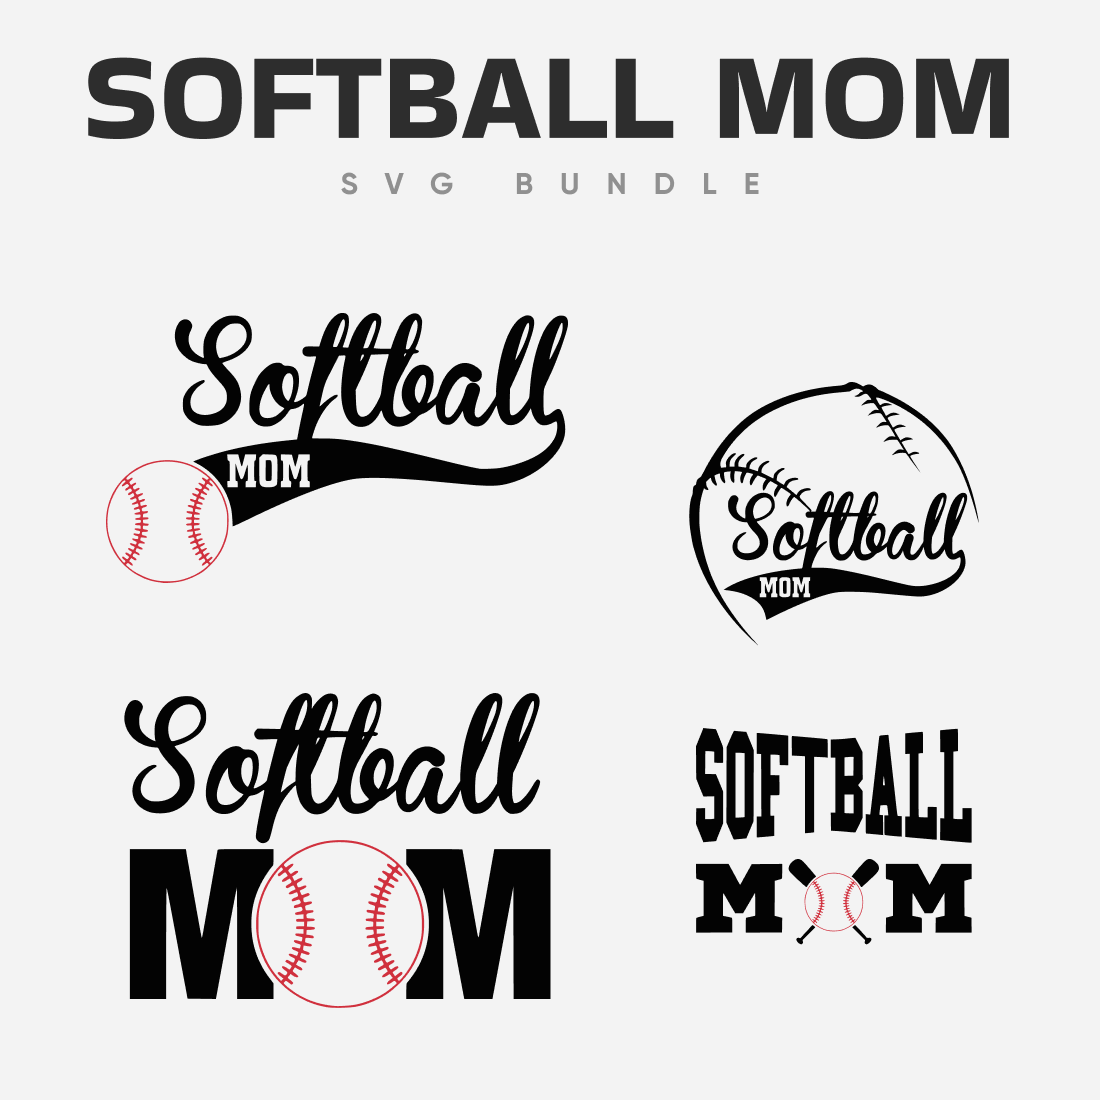 Softball mom svg bundle.